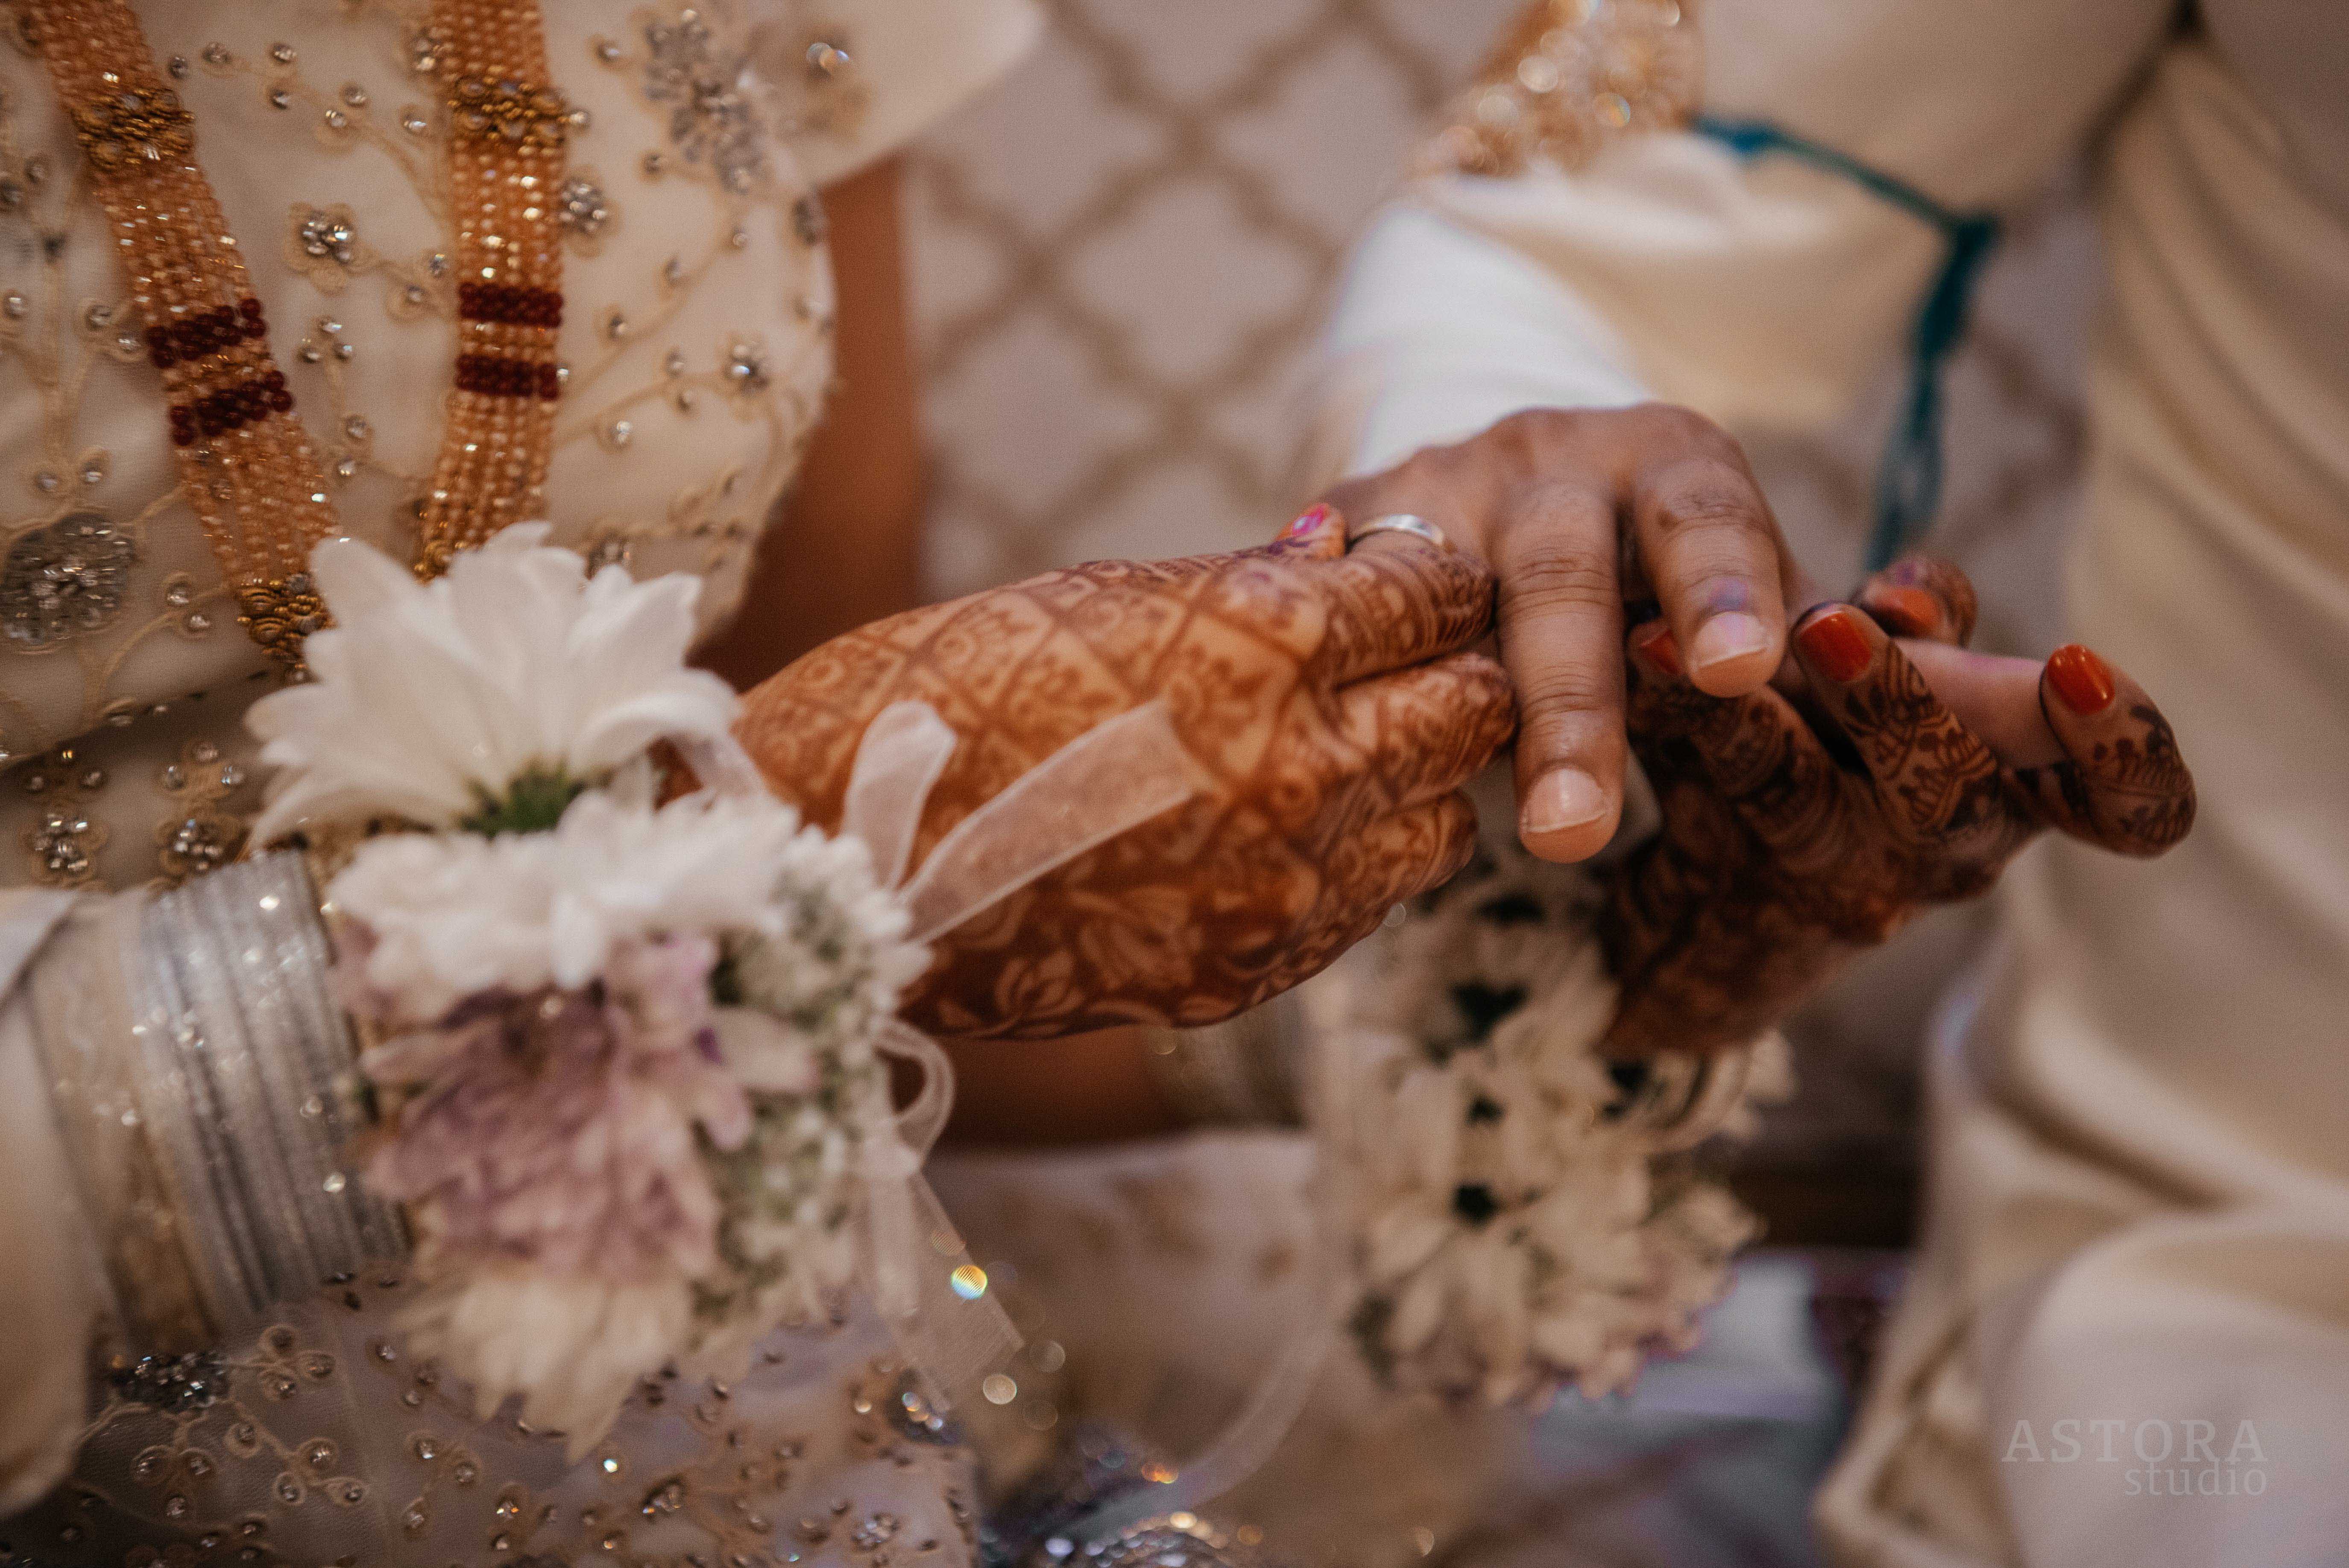 South Asian marriage photo Toronto | Astora Studio